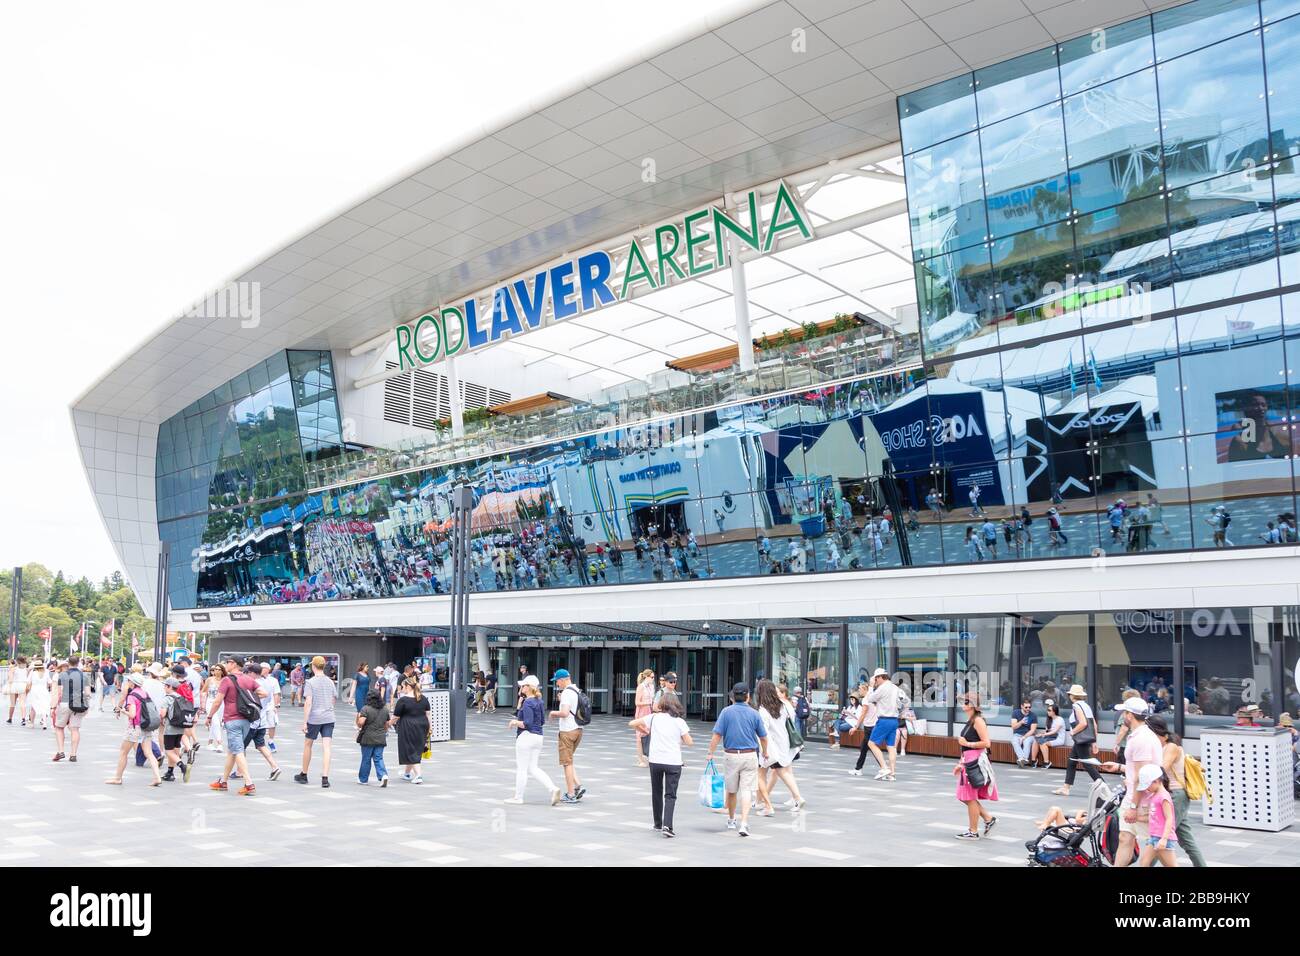 Rod Laver Arena at Melbourne Open 2020 tennis tournament, City Central, Melbourne, Victoria, Australia Stock Photo